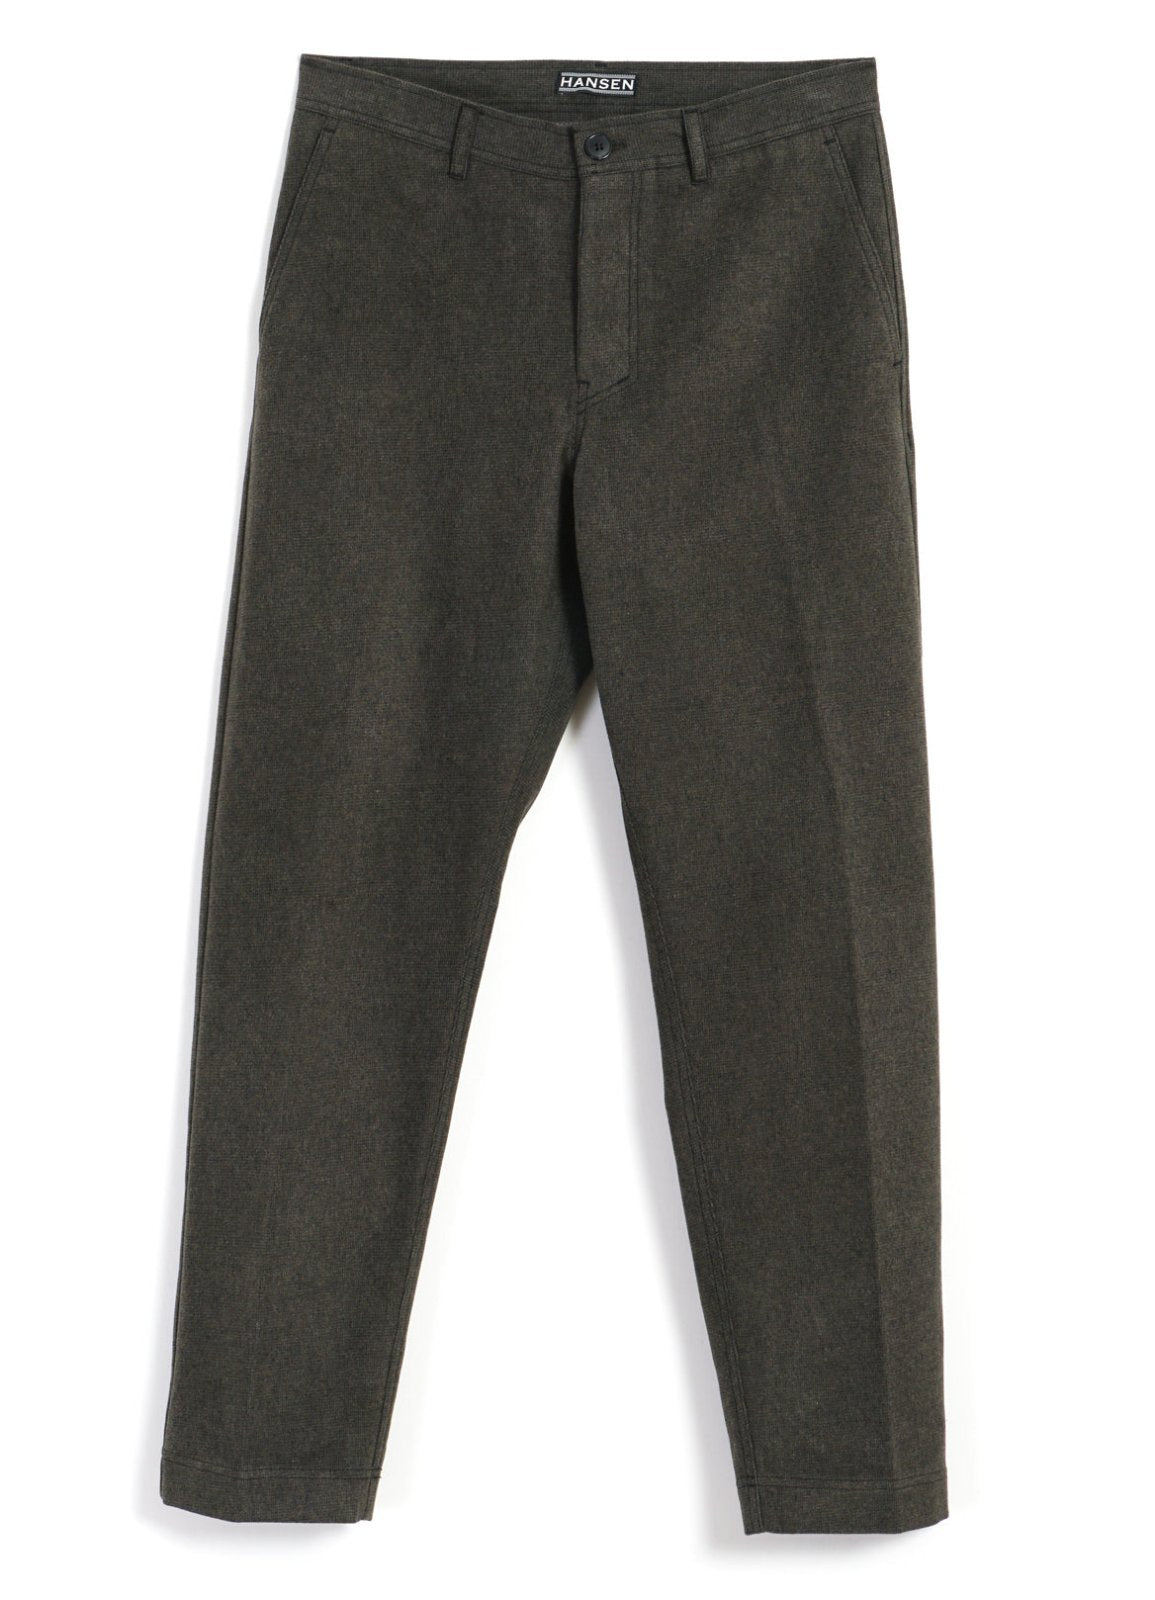 HANSEN GARMENTS - KEN | Wide Cut Trousers | Greenish - HANSEN Garments